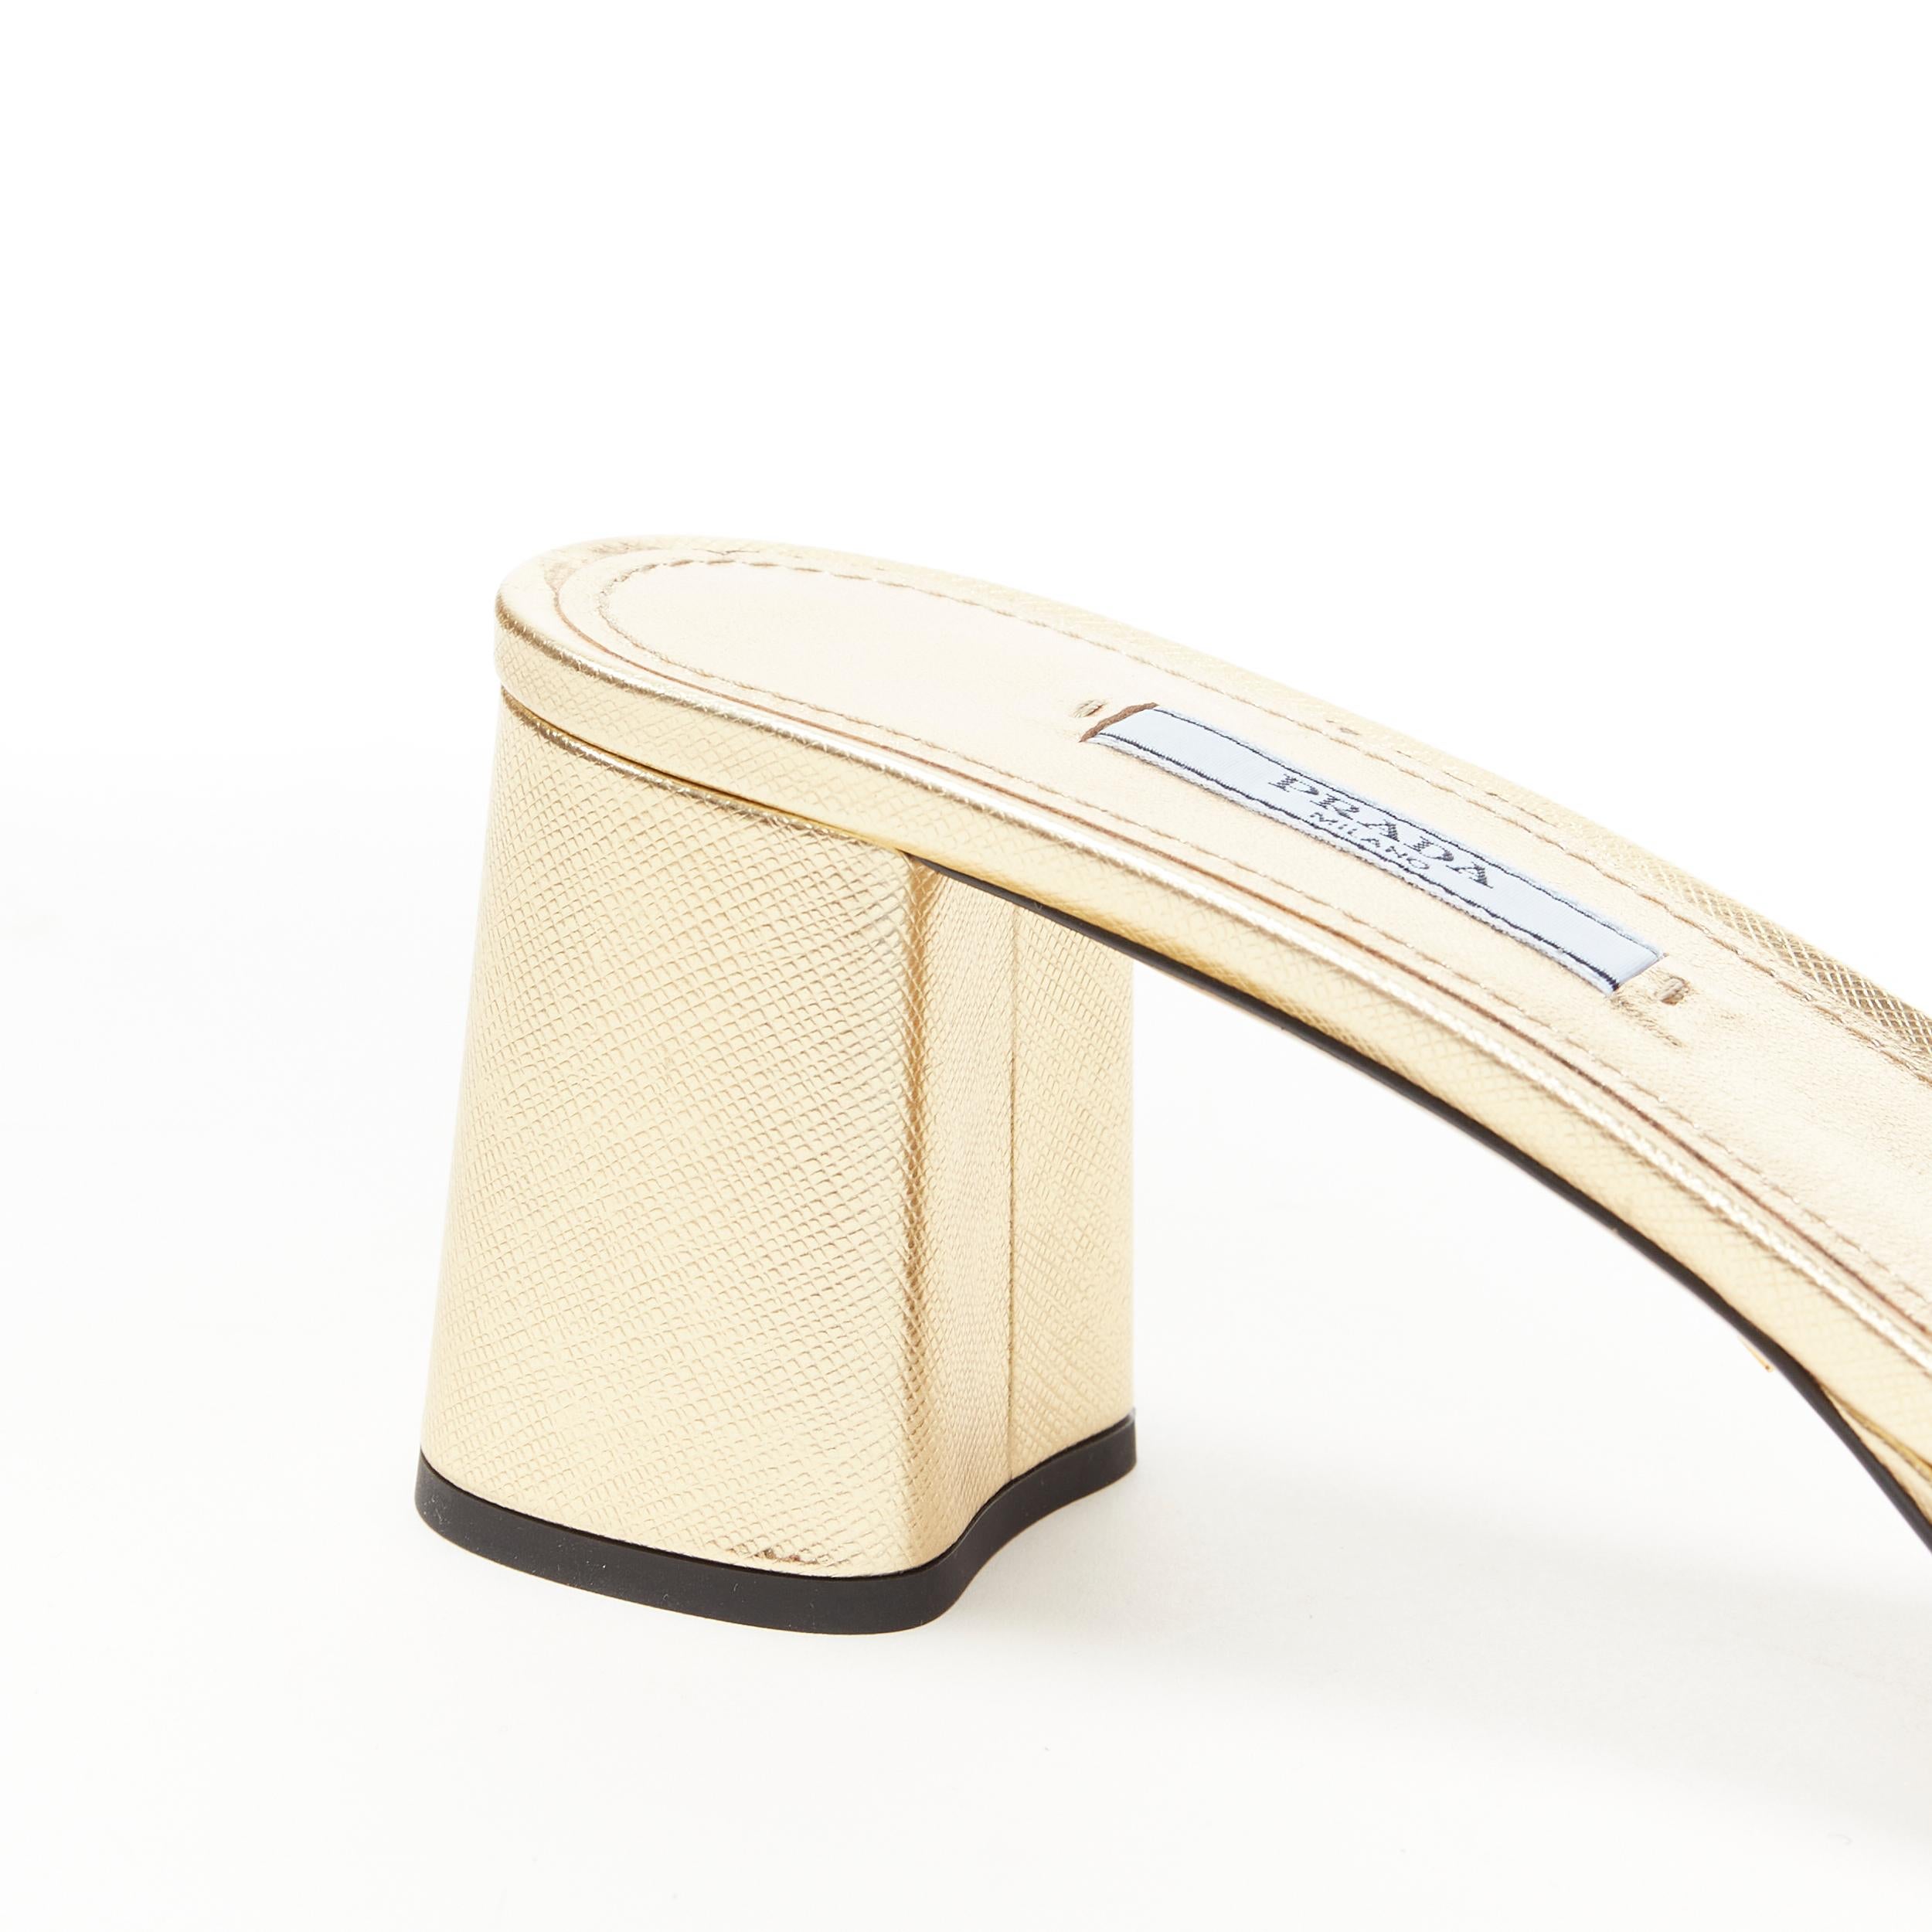 Women's new PRADA metallic gold saffiano leather logo open toe mule clog sandal EU38.5